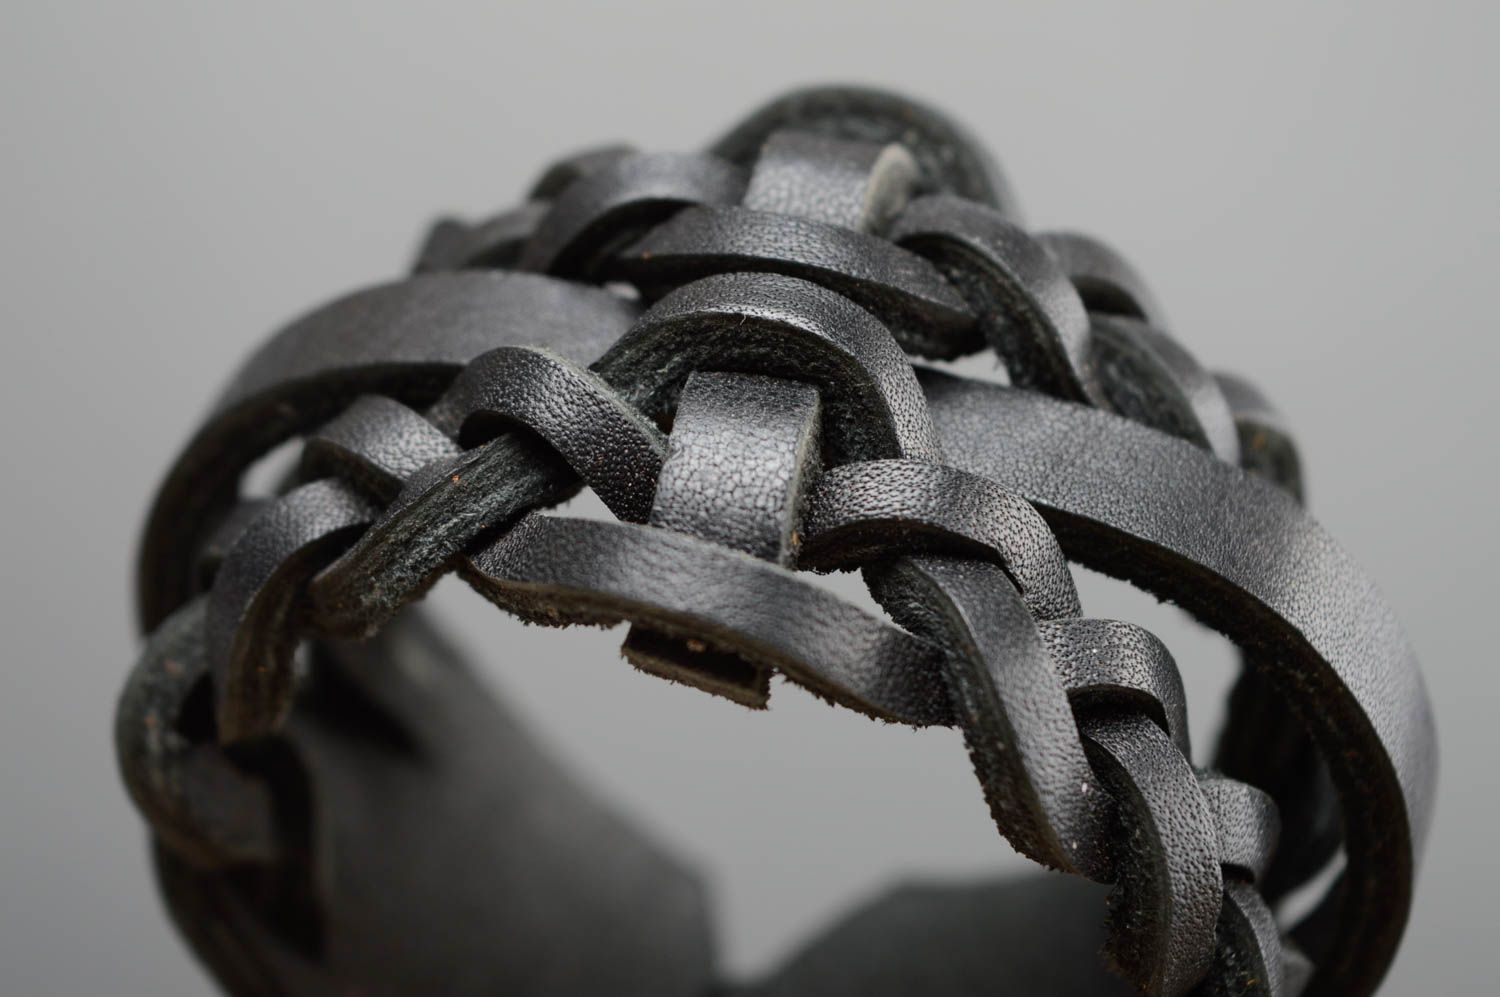 Black woven leather bracelet photo 2